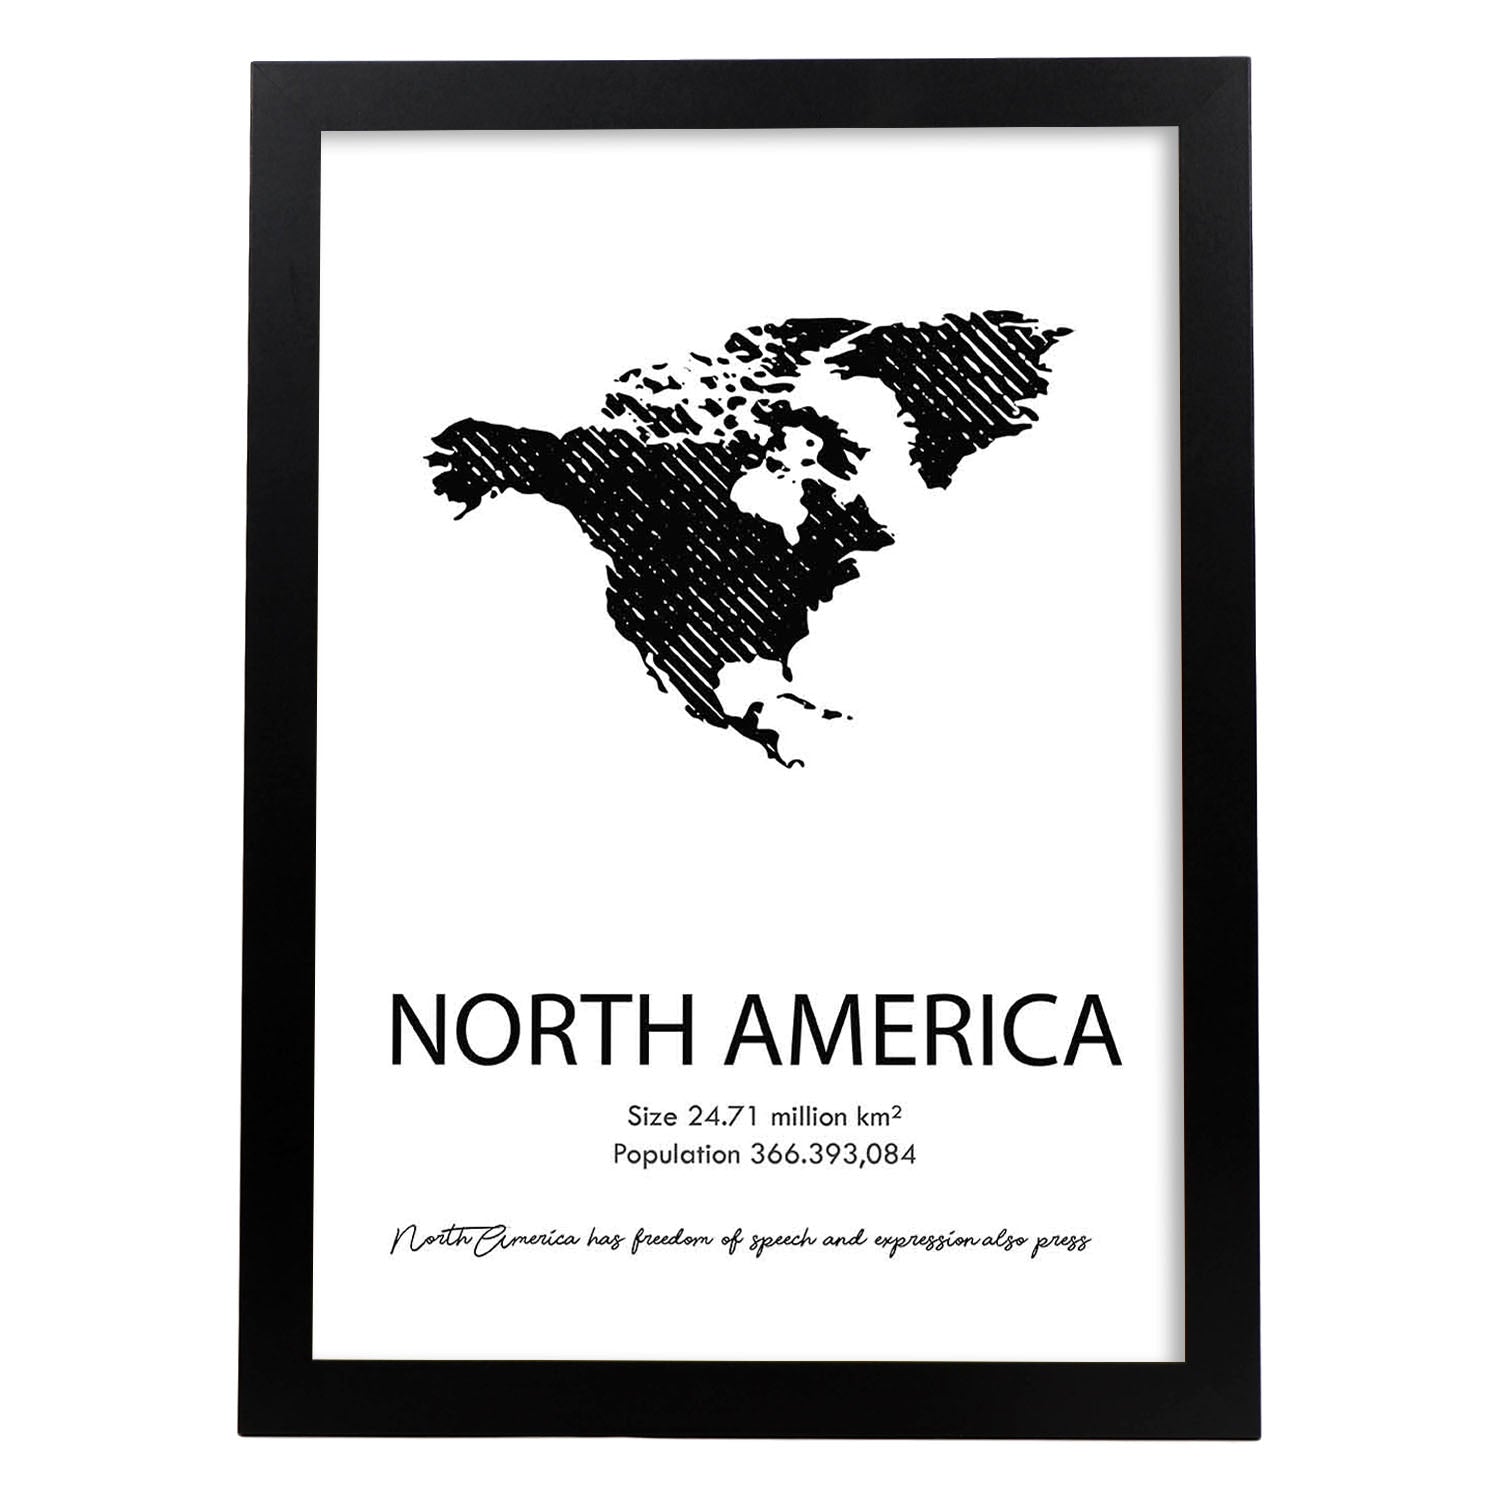 Poster de Norteamérica. Láminas de paises y continentes del mundo.-Artwork-Nacnic-A3-Marco Negro-Nacnic Estudio SL